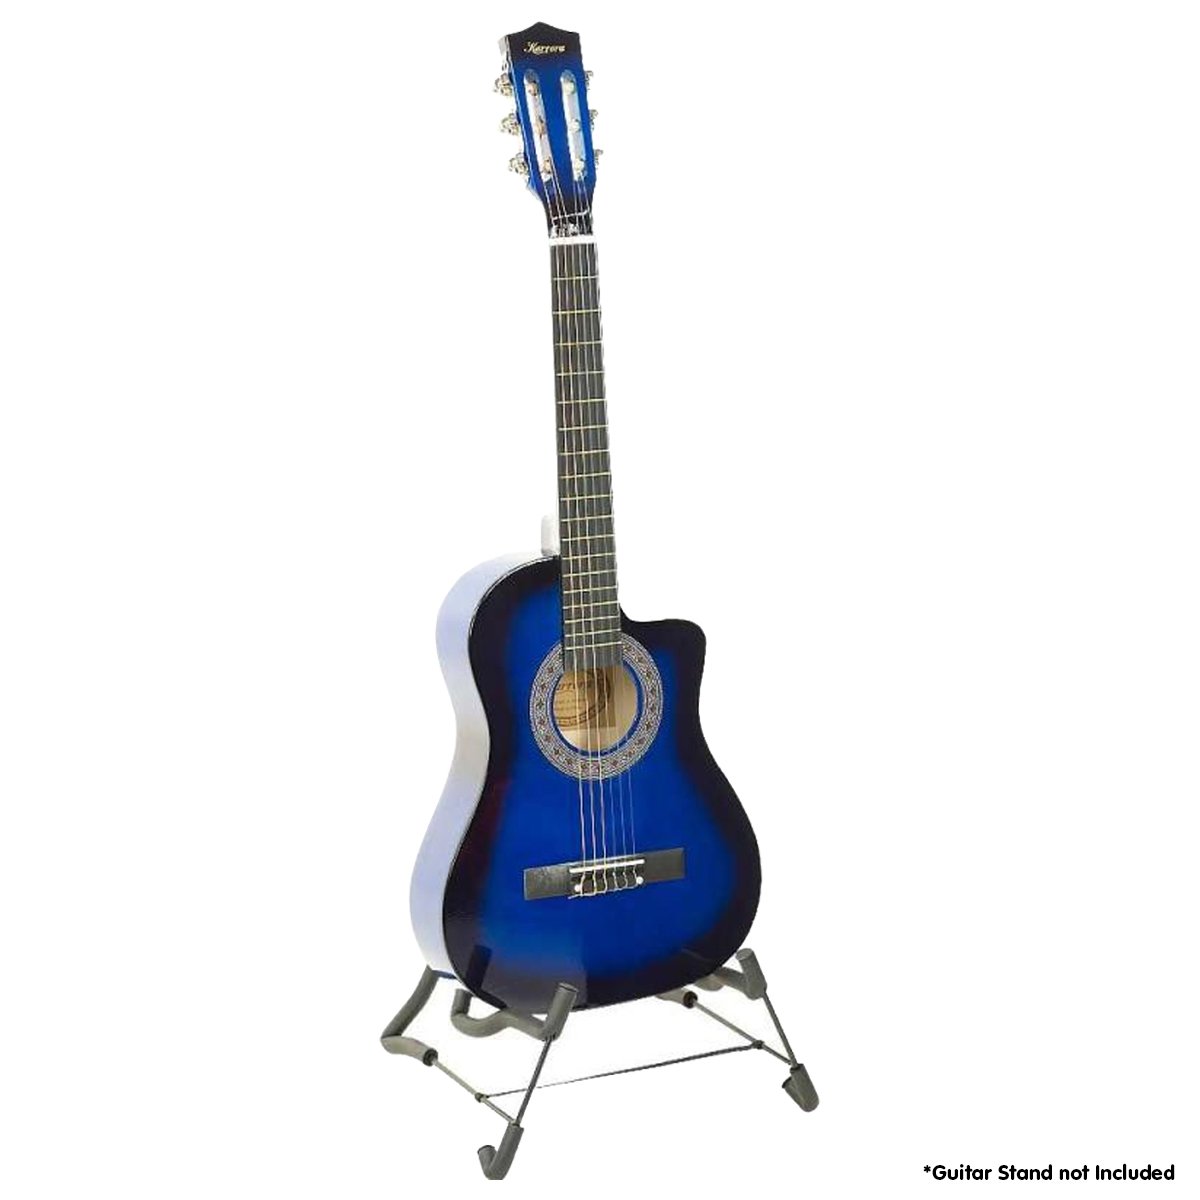 38in Cutaway Acoustic Guitar with guitar bag - Blue Burst 2